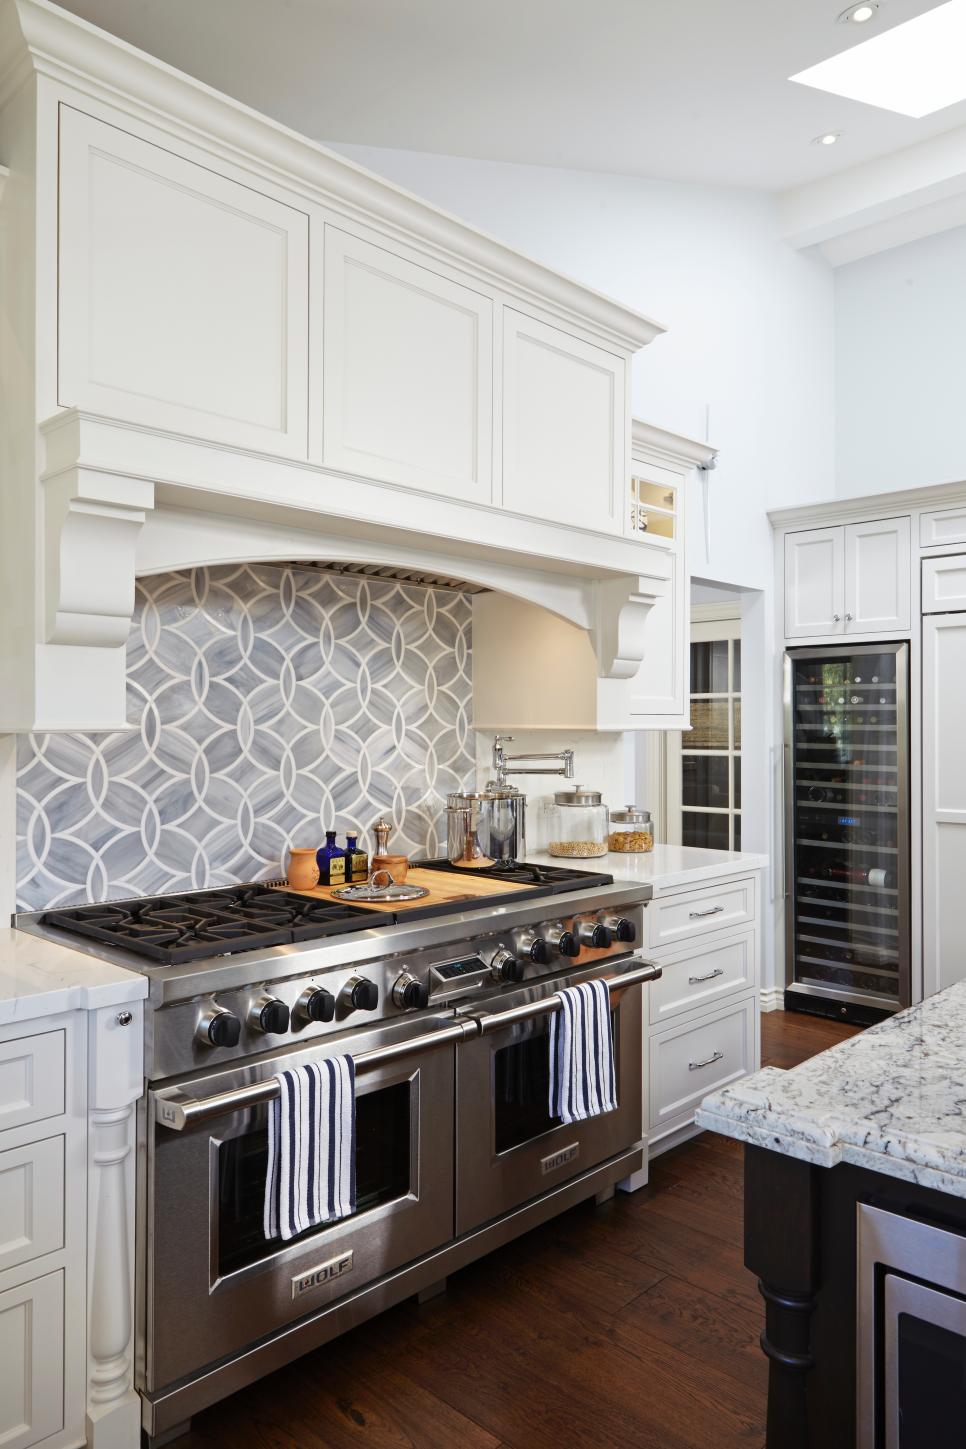 Geometric Tile Backsplash Adds Modern Flair To White Kitchen Hgtv